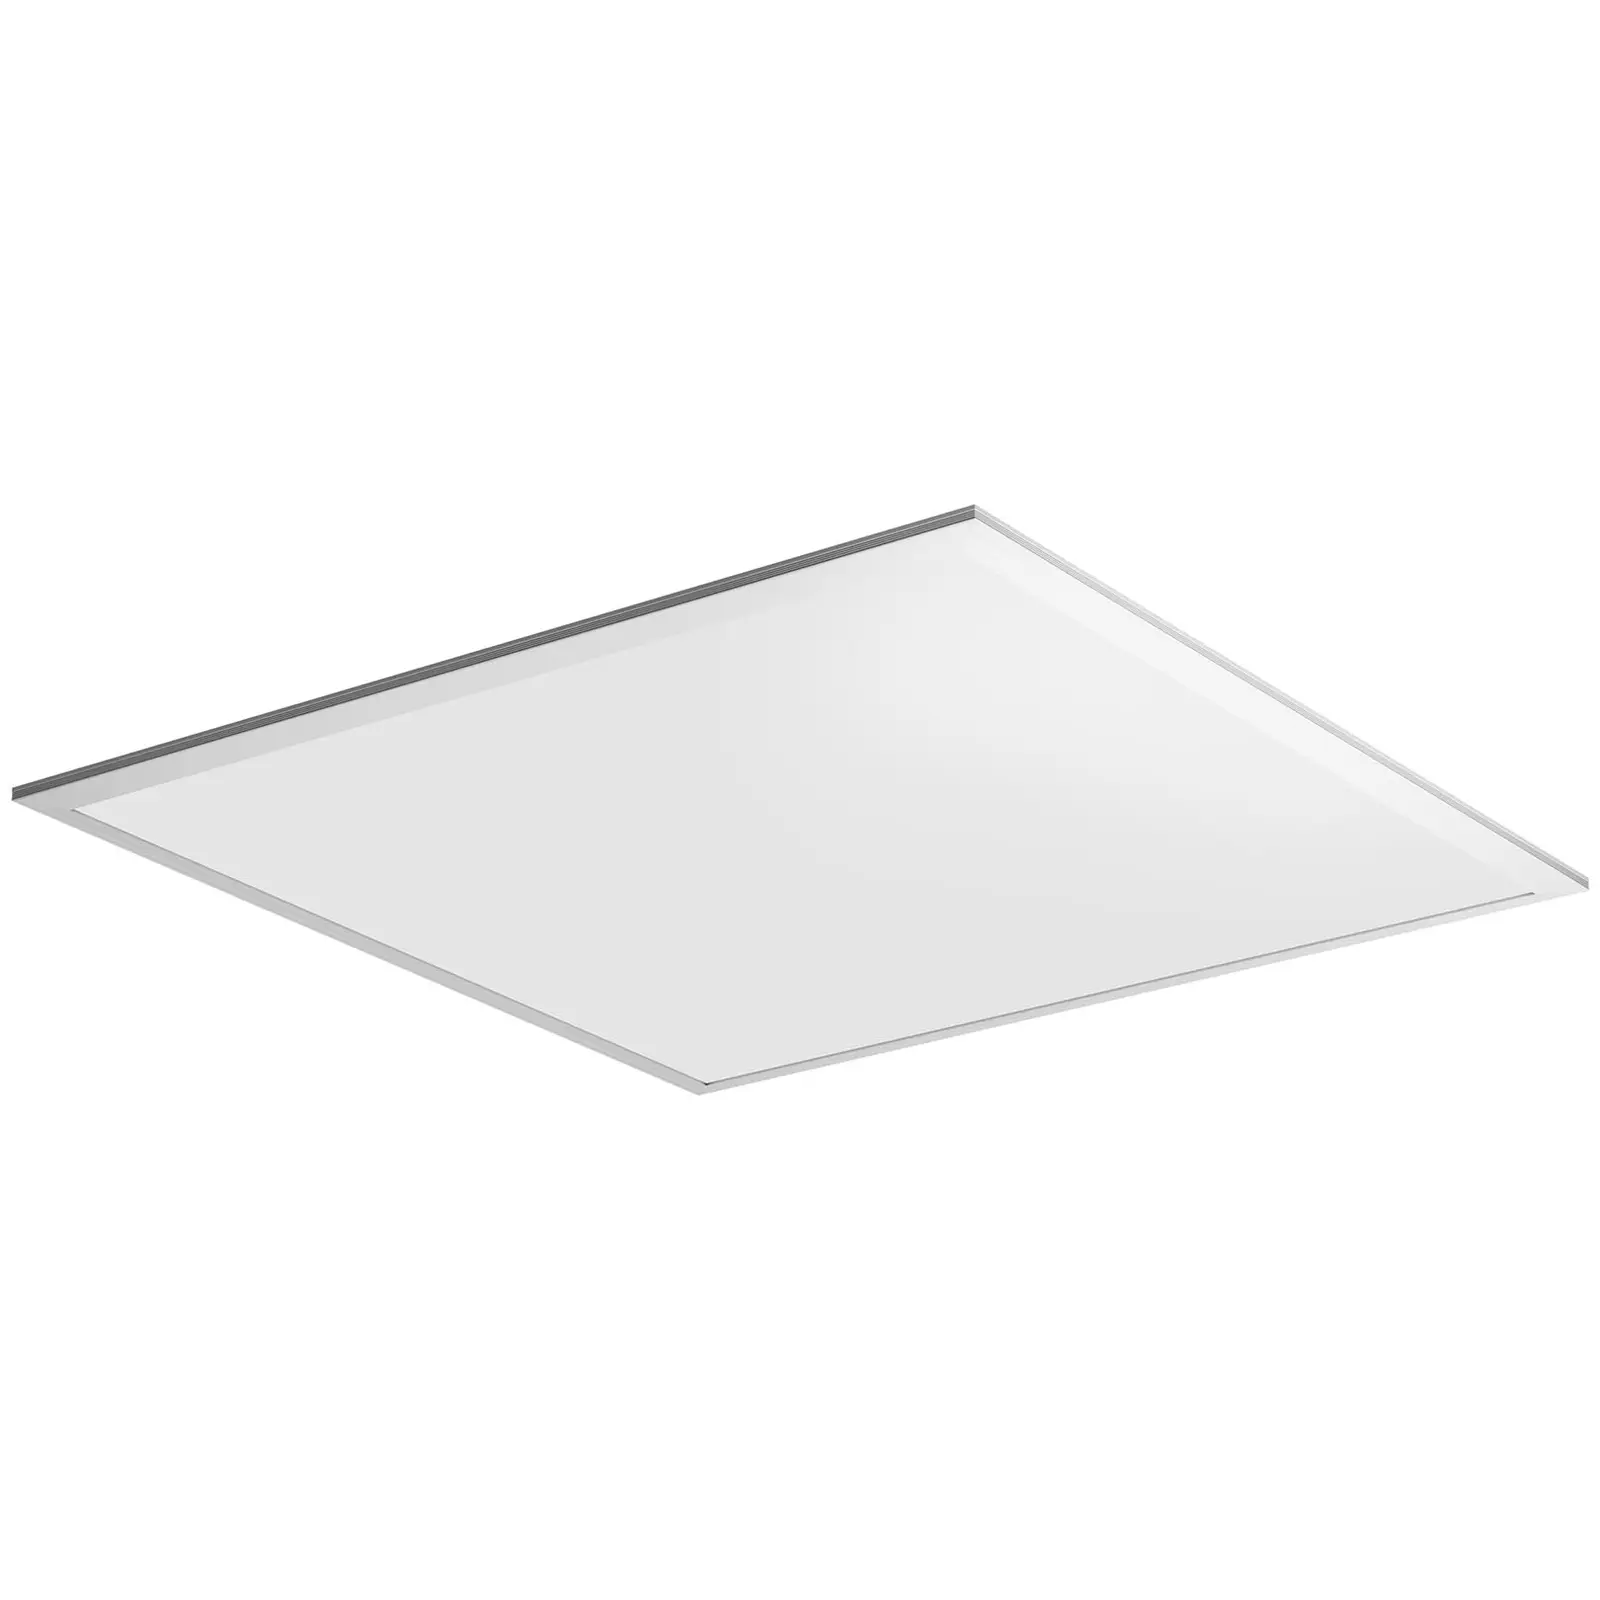 Pannello LED da soffitto - 62 x 62 cm - 40 W - 3.800 lm - 4.000 K (bianco neutro)